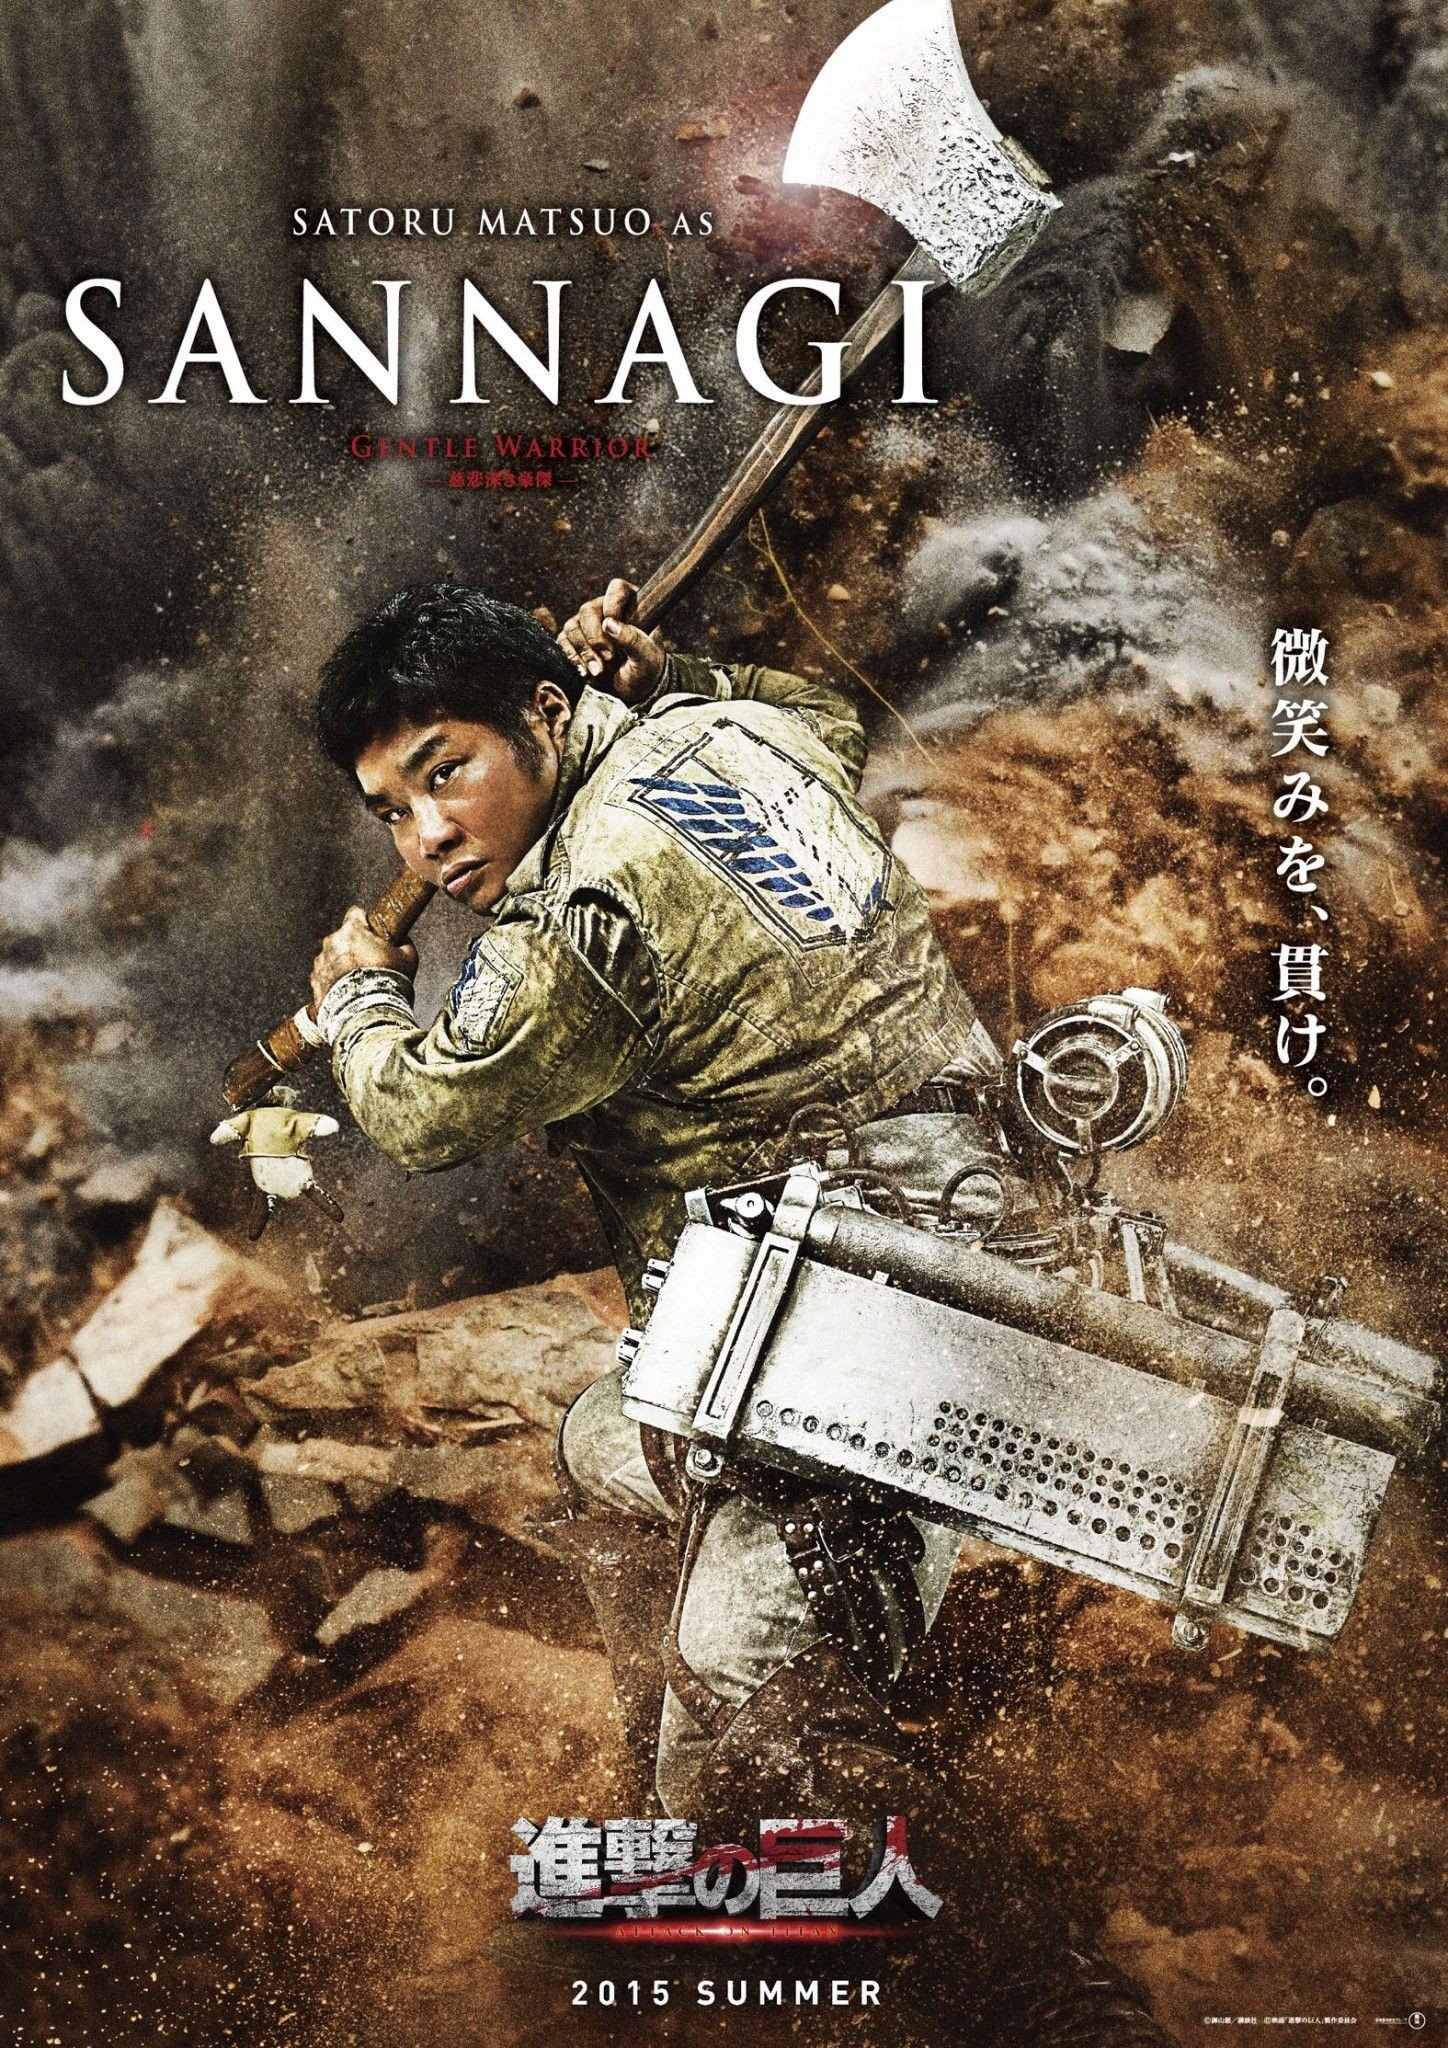 Sannagi Attack on Titan Part One Review